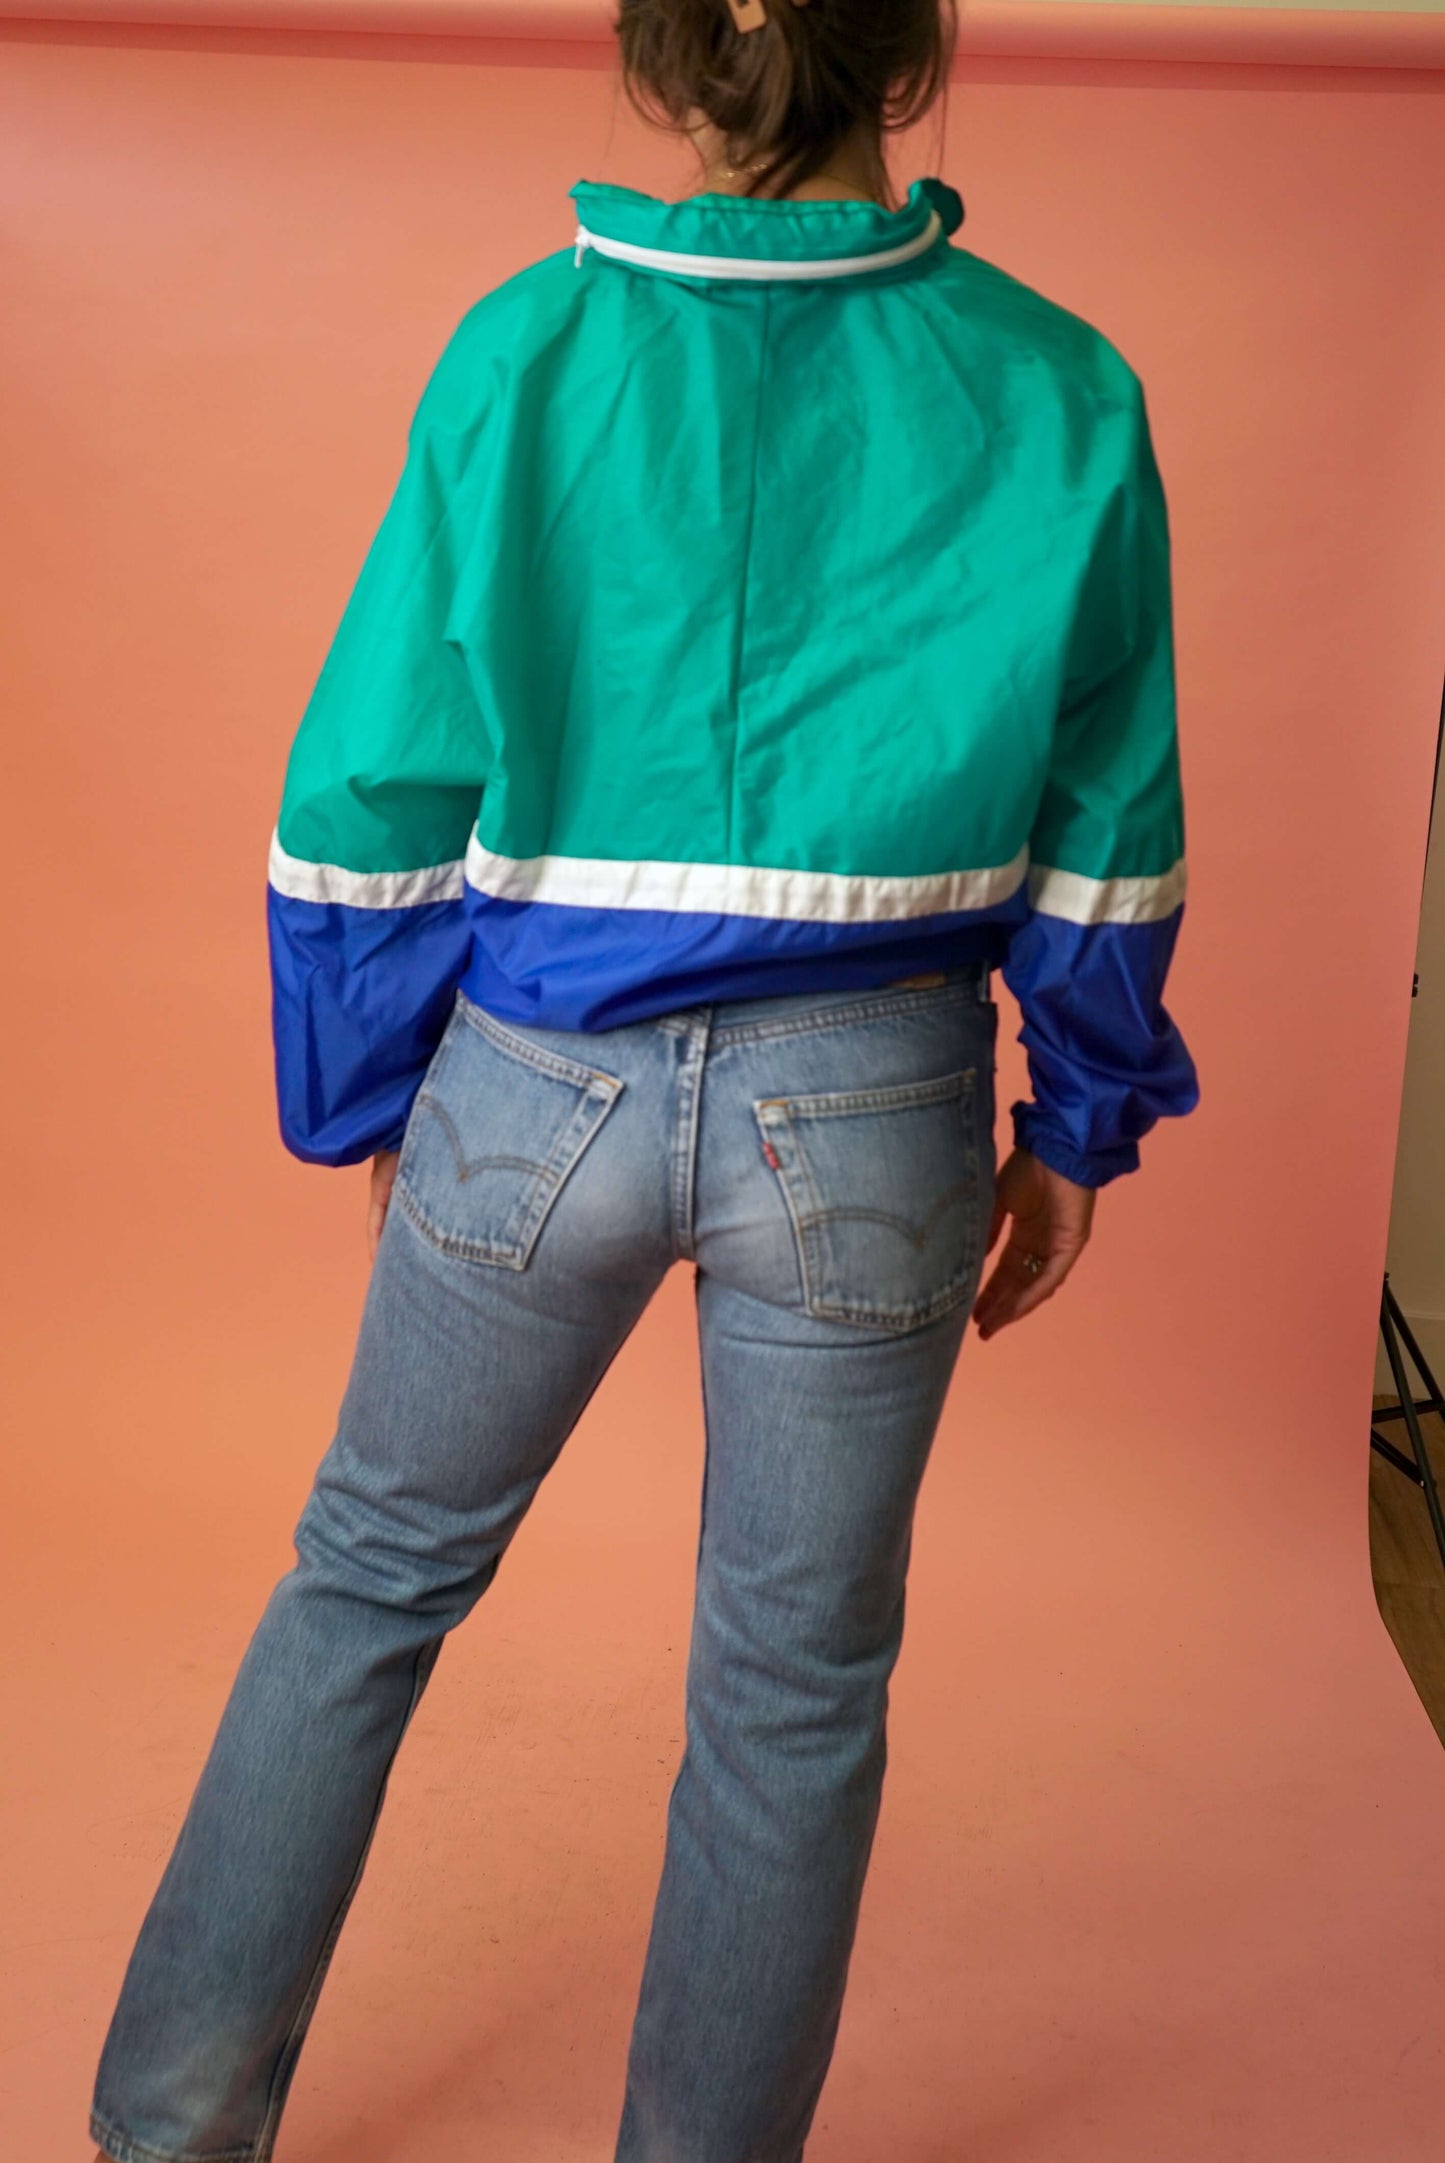 Vintage Shell Tracksuit Jacket Retro Windbreaker Blue Green Size L-XL